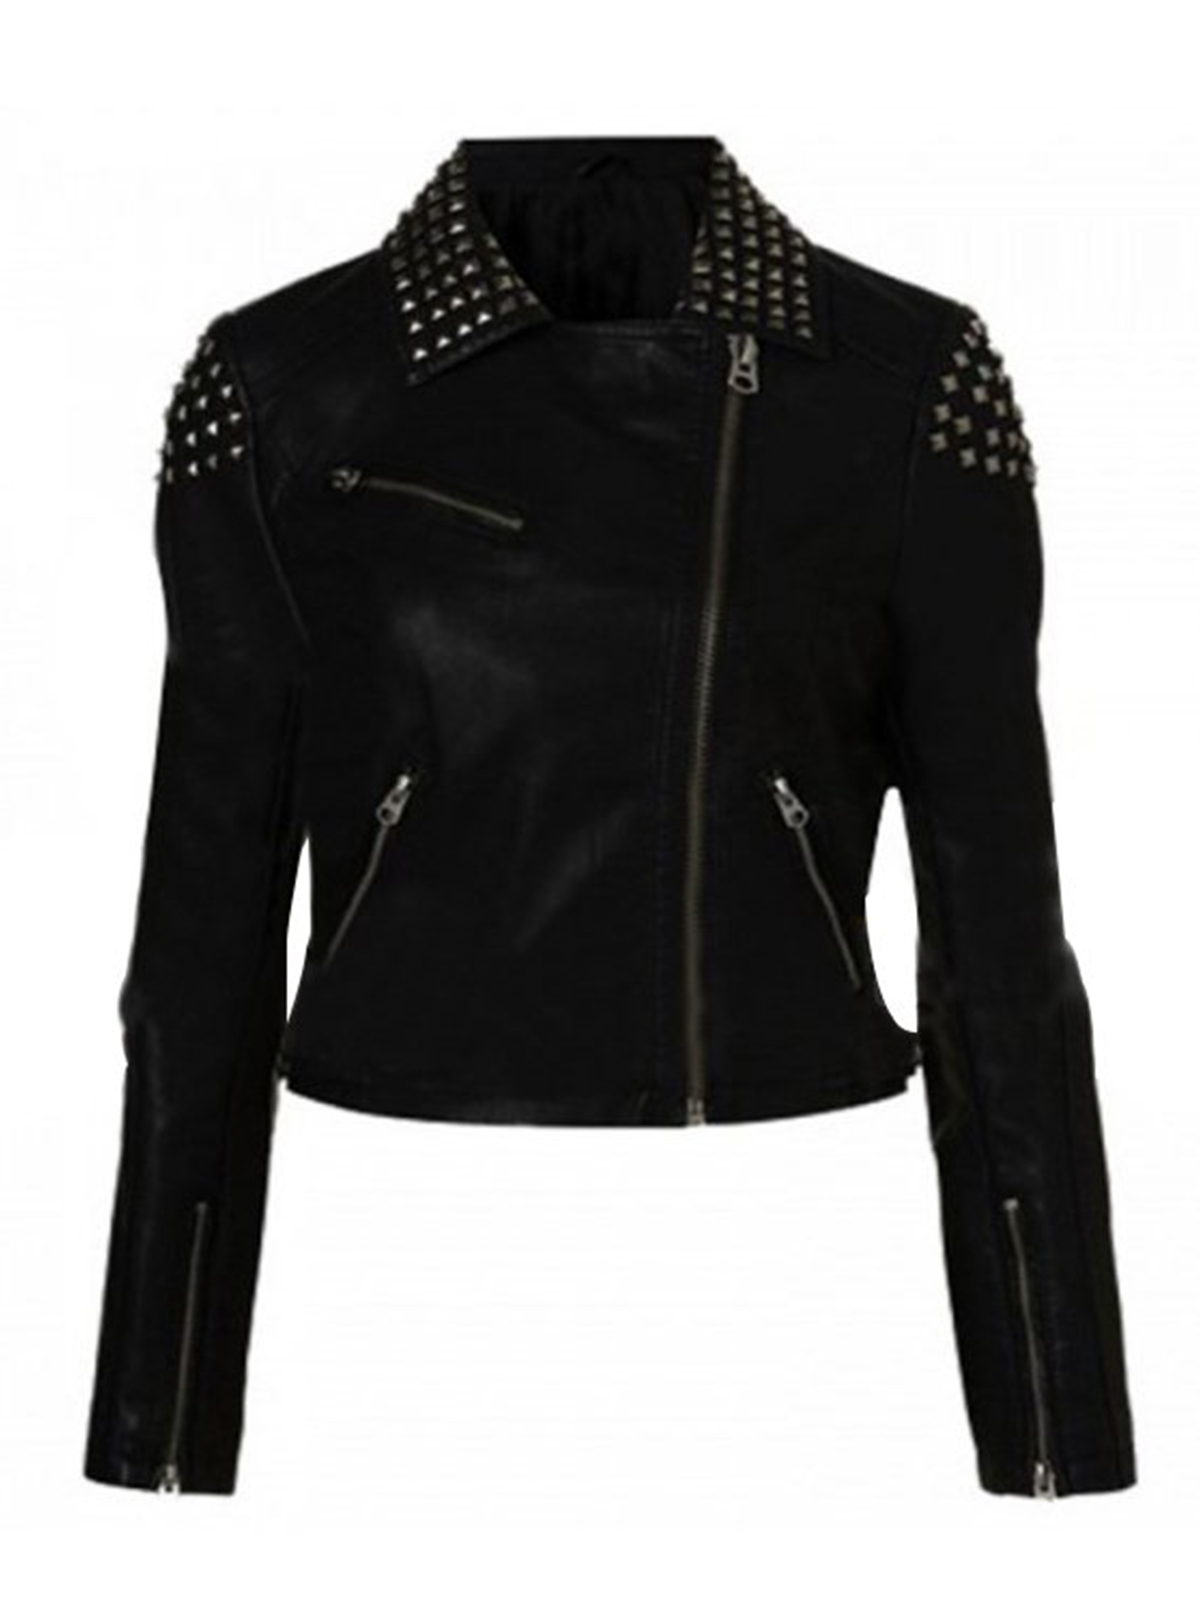 Saraya-Jade Bevis Studded Leather Jacket – Bay Perfect